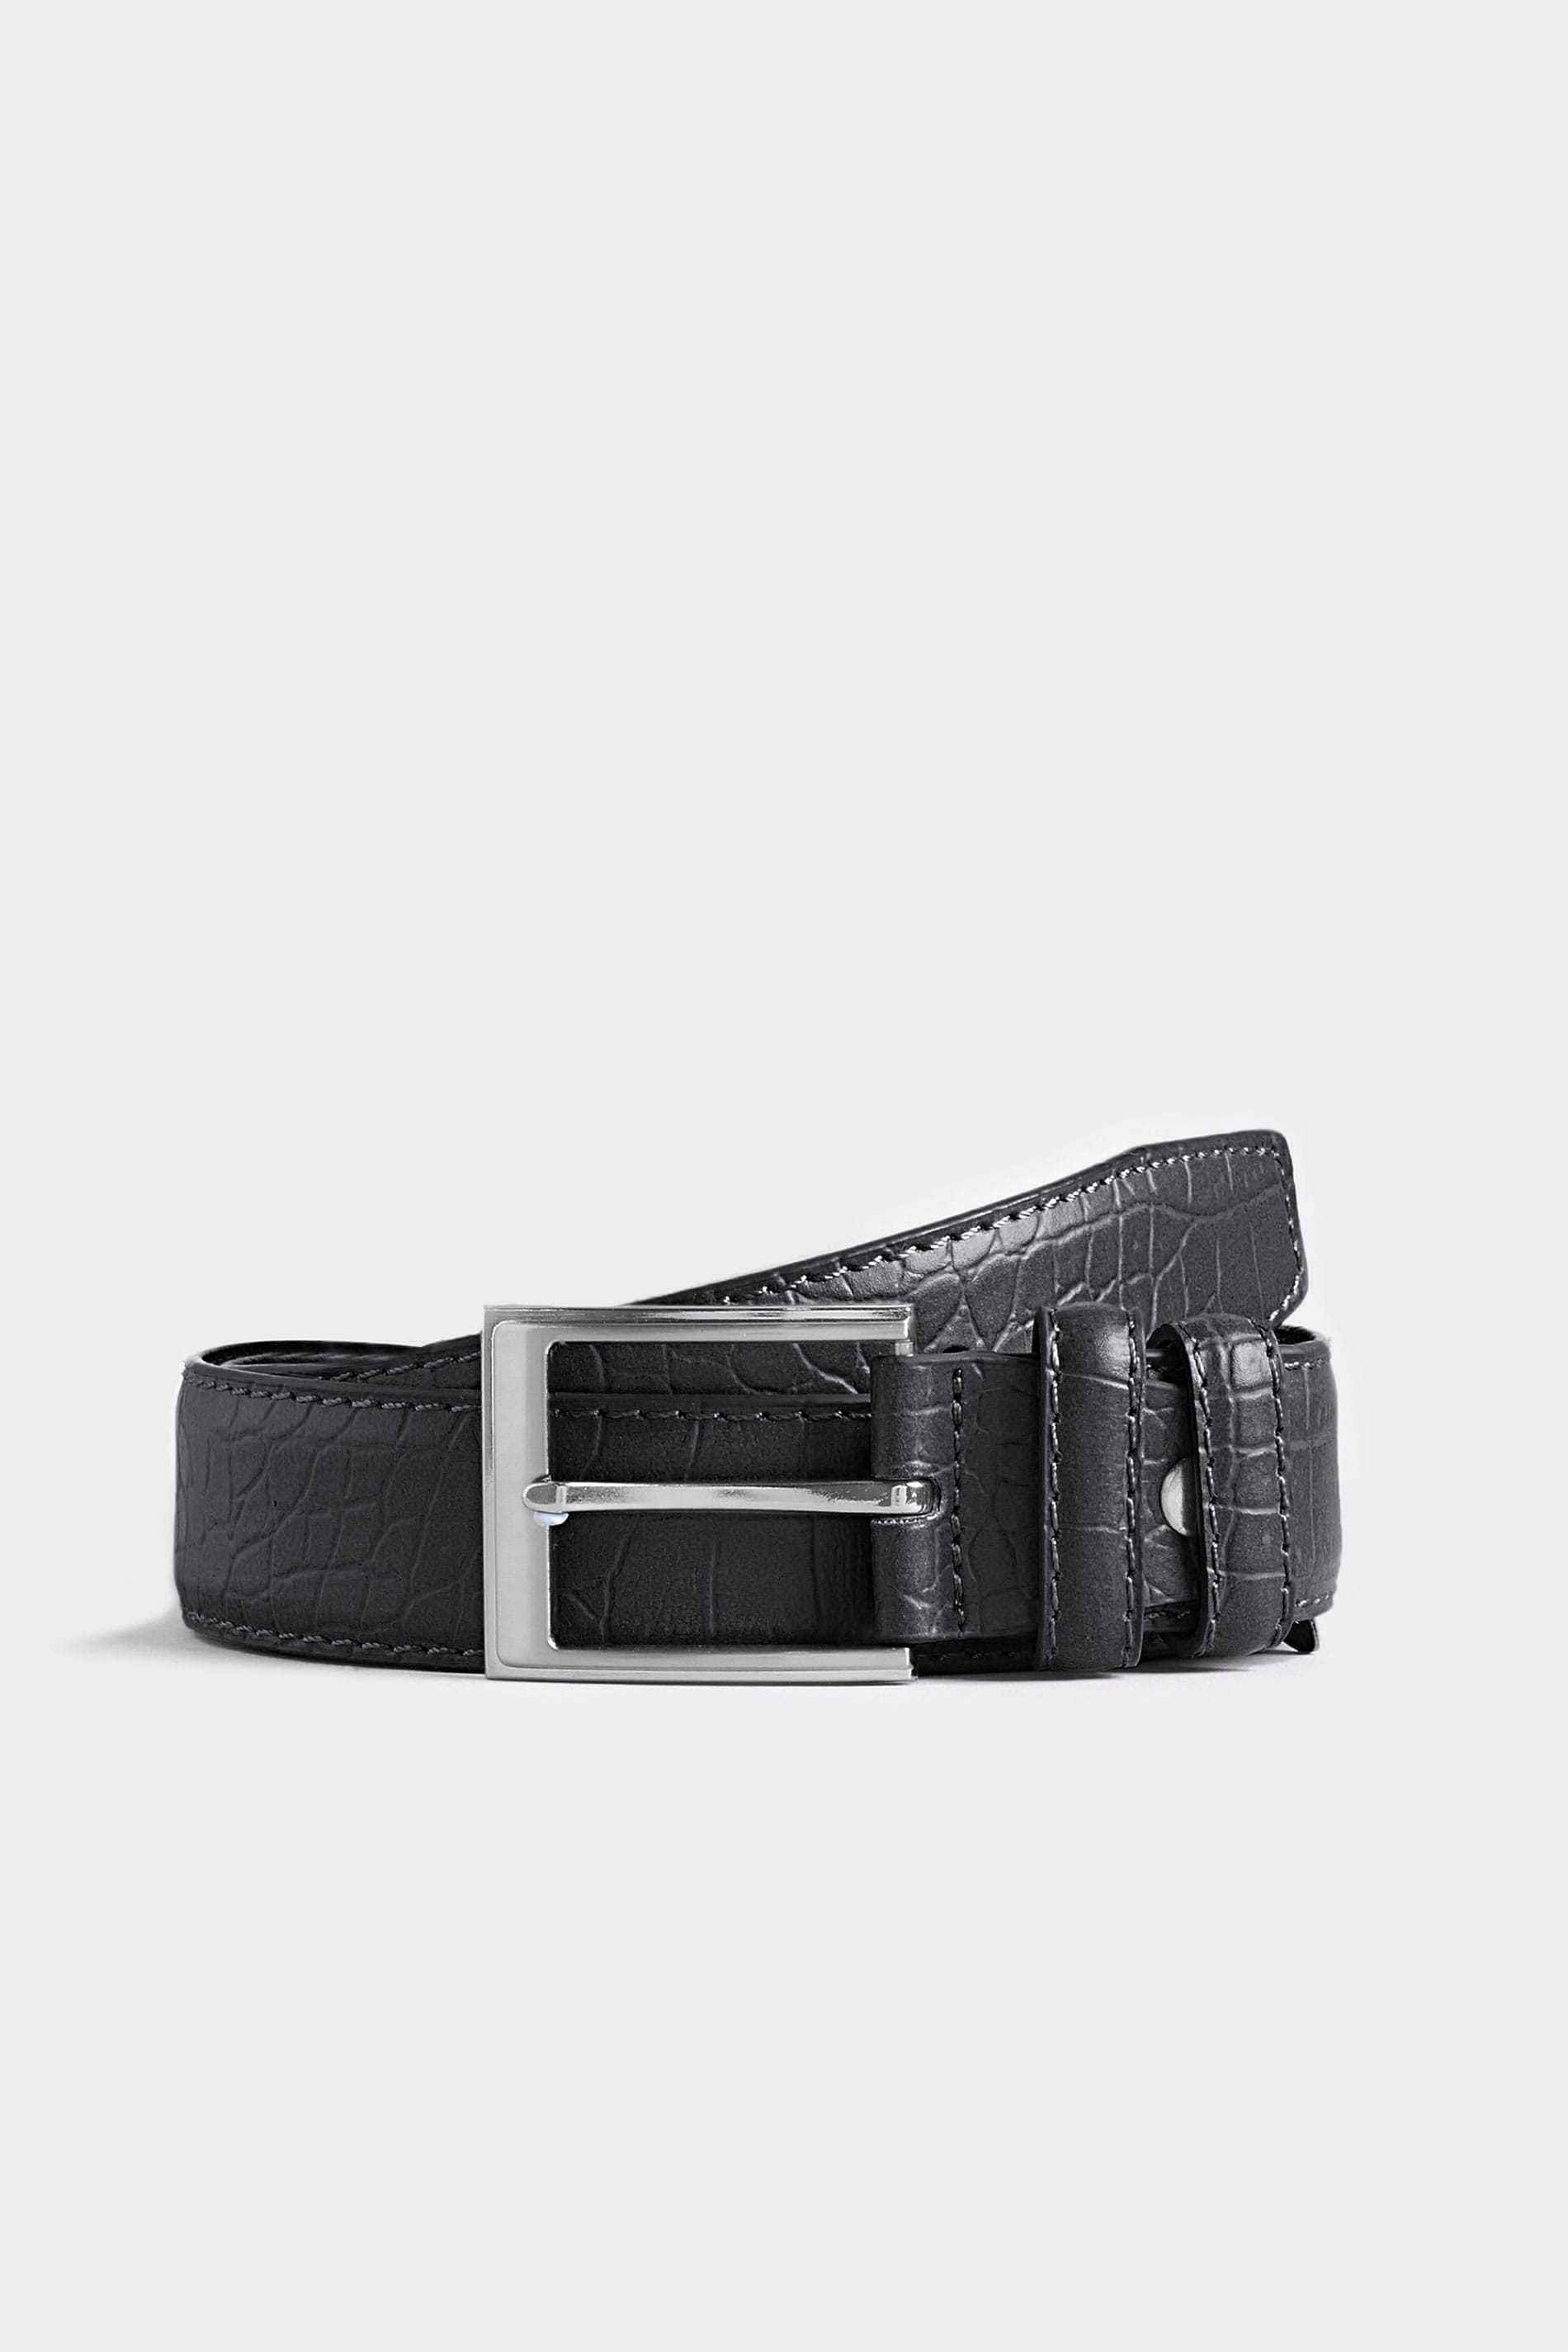 BadRhino Black Textured Bonded Leather Belt 1